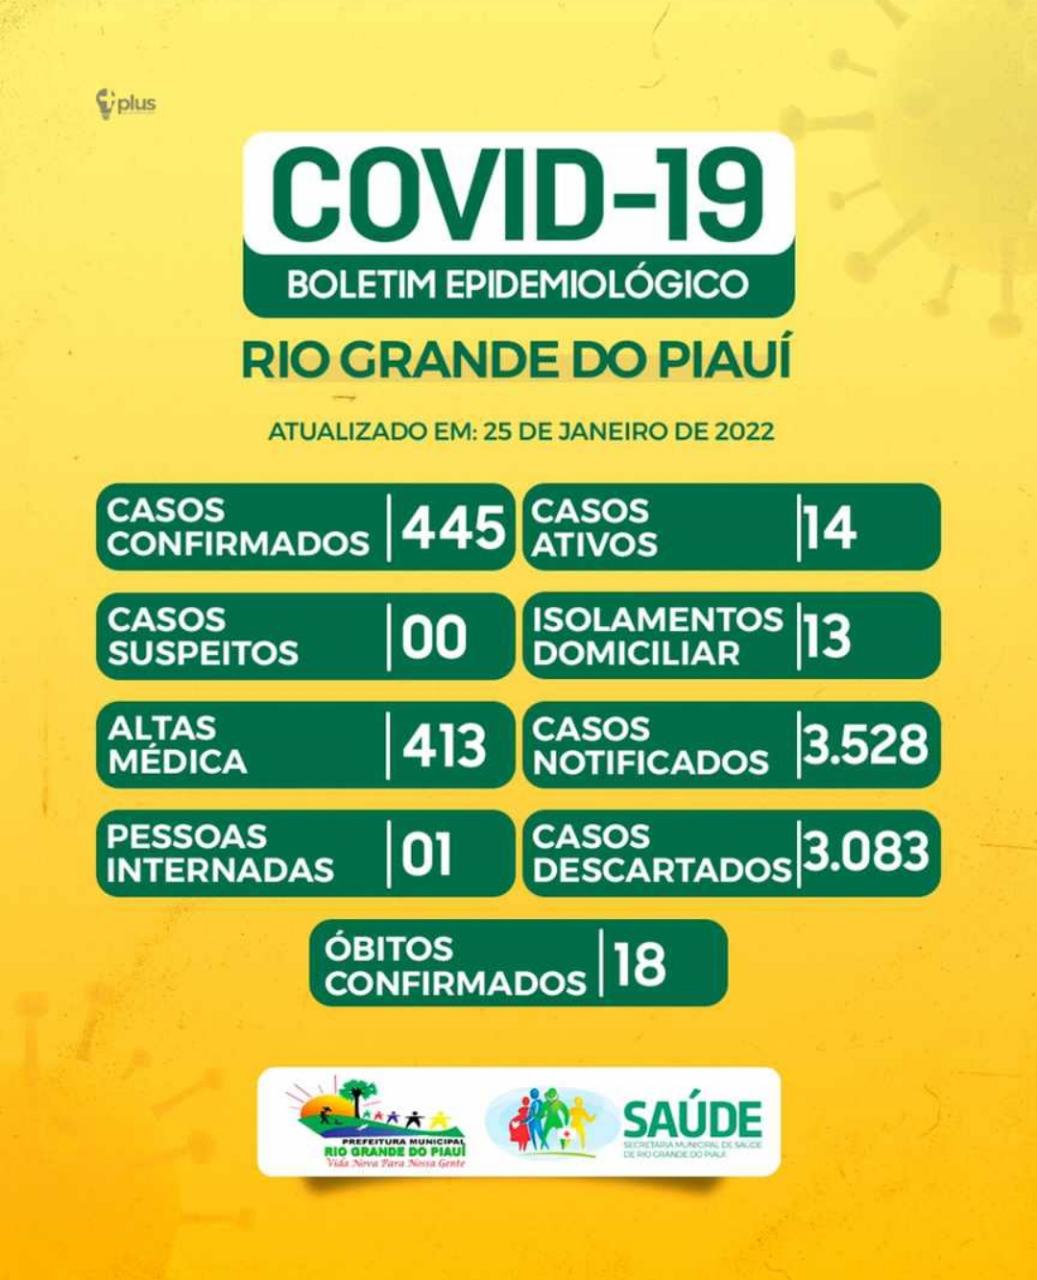 BOLETIM EPIDEMIOLÓGICO - COVID-19 - RIO GRANDE 25.01.2022